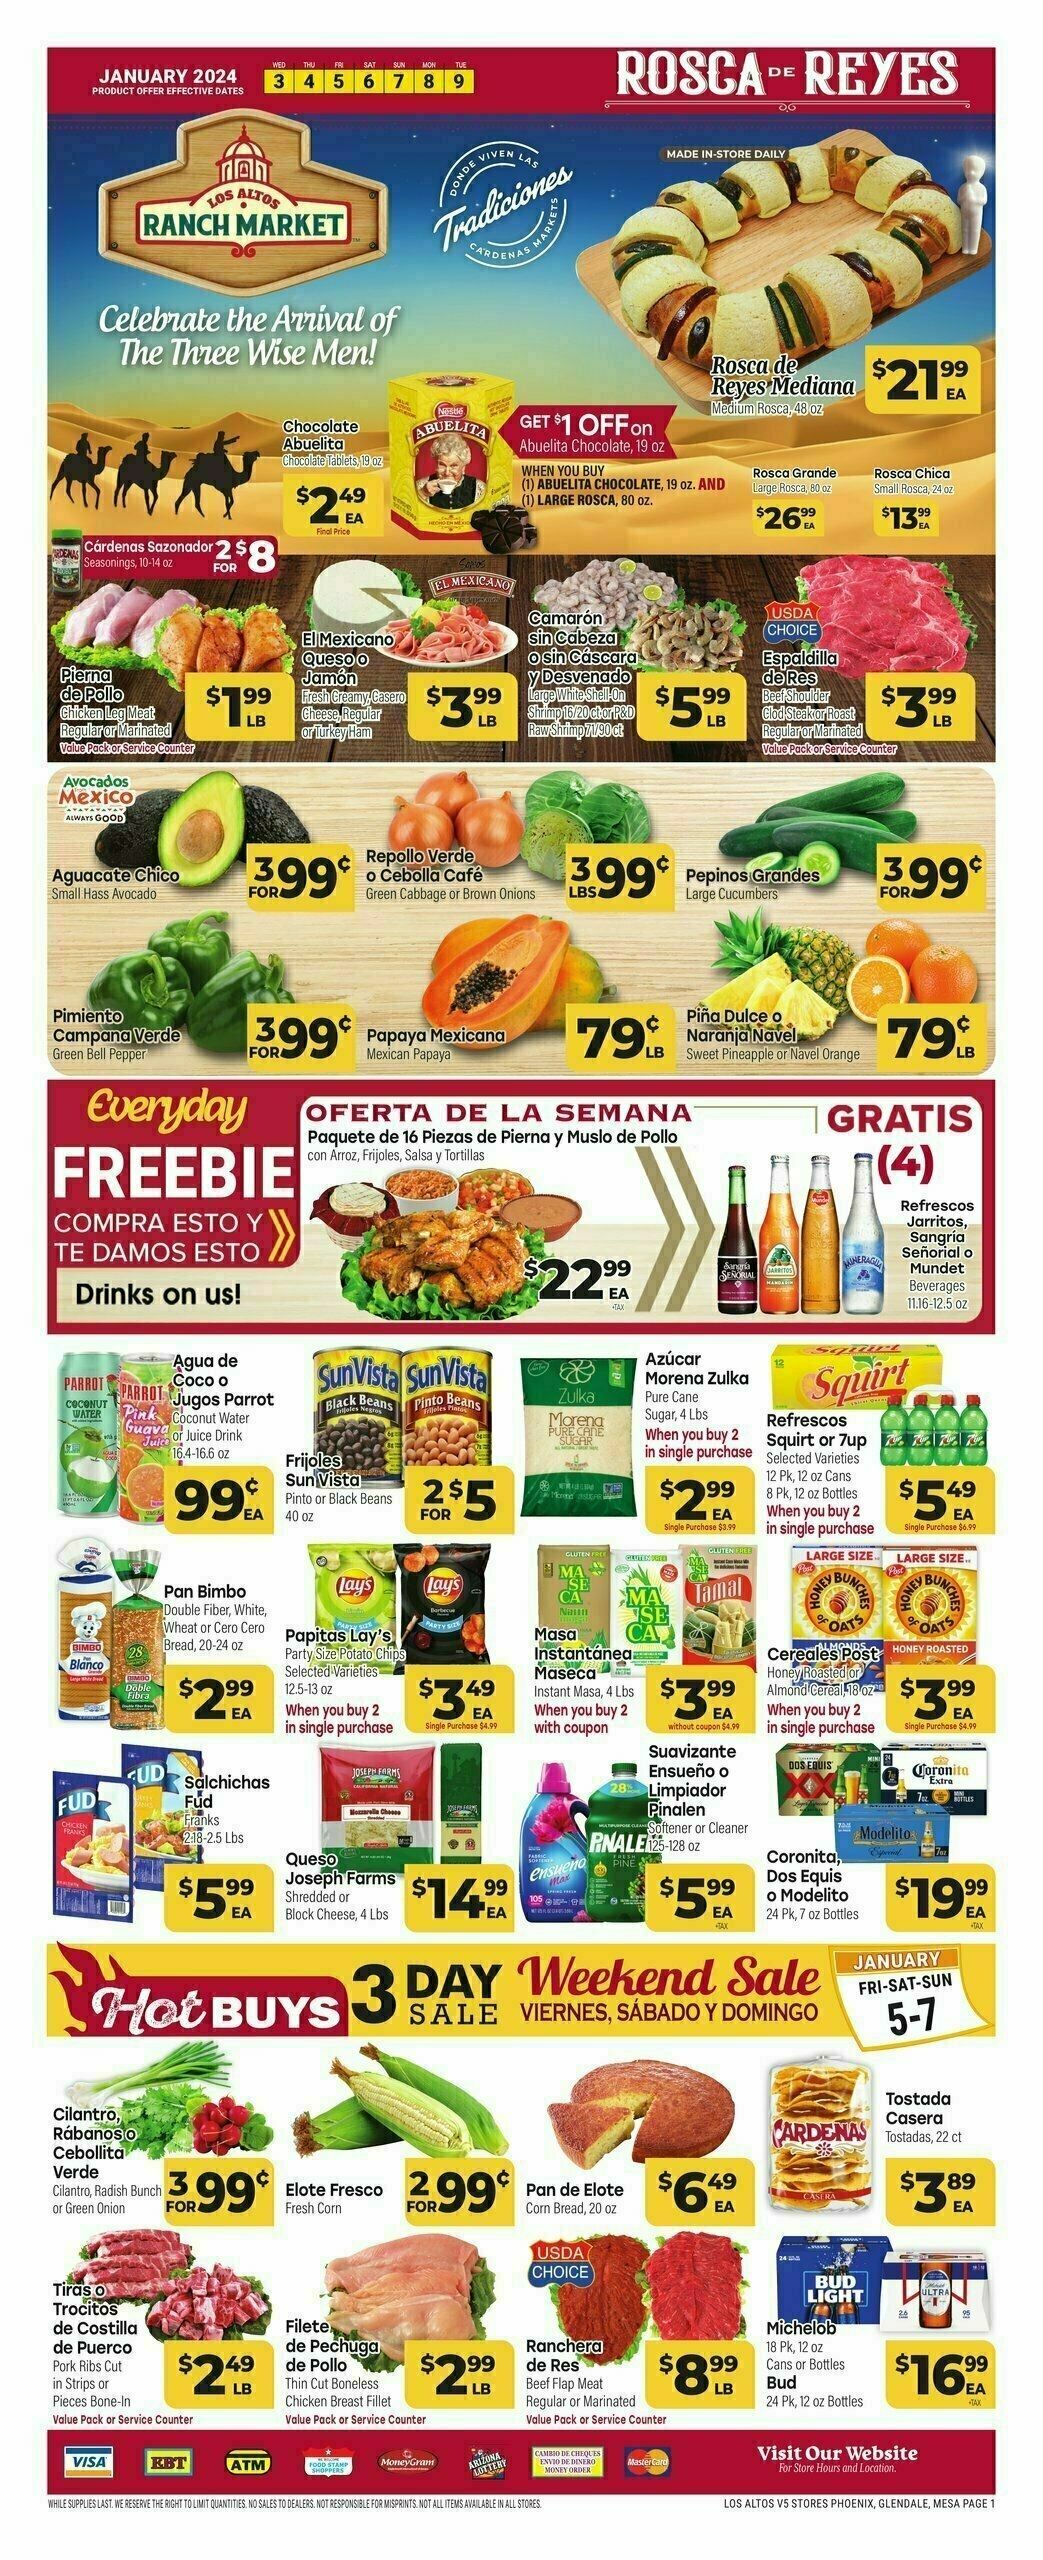 Cardenas Market Weekly Ad from January 3